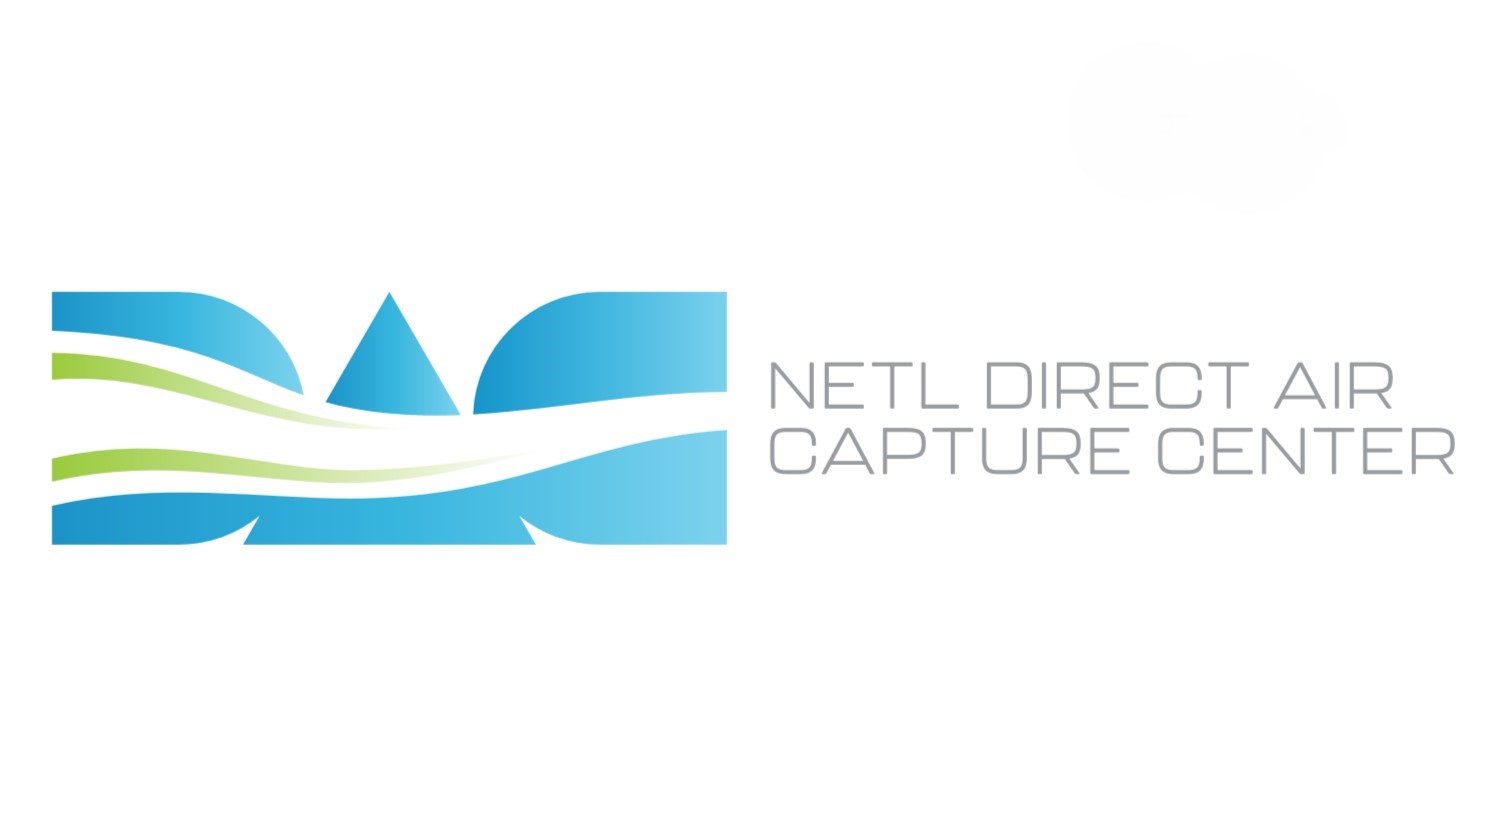 Direct Air Capture Center logo